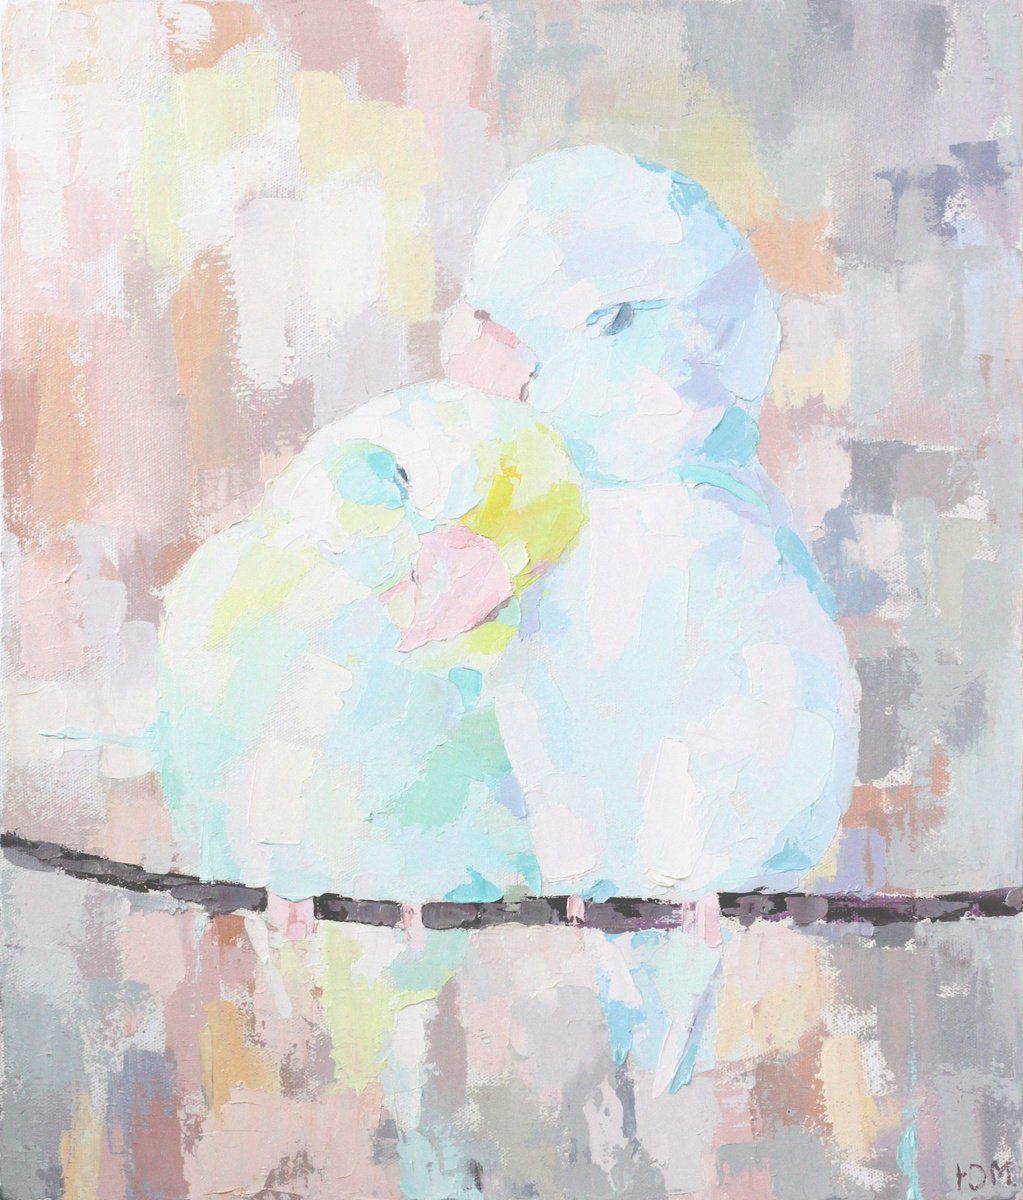 Two parrots - Love Birds - Couple in Love - Oil painting by Yuliia Meniailova